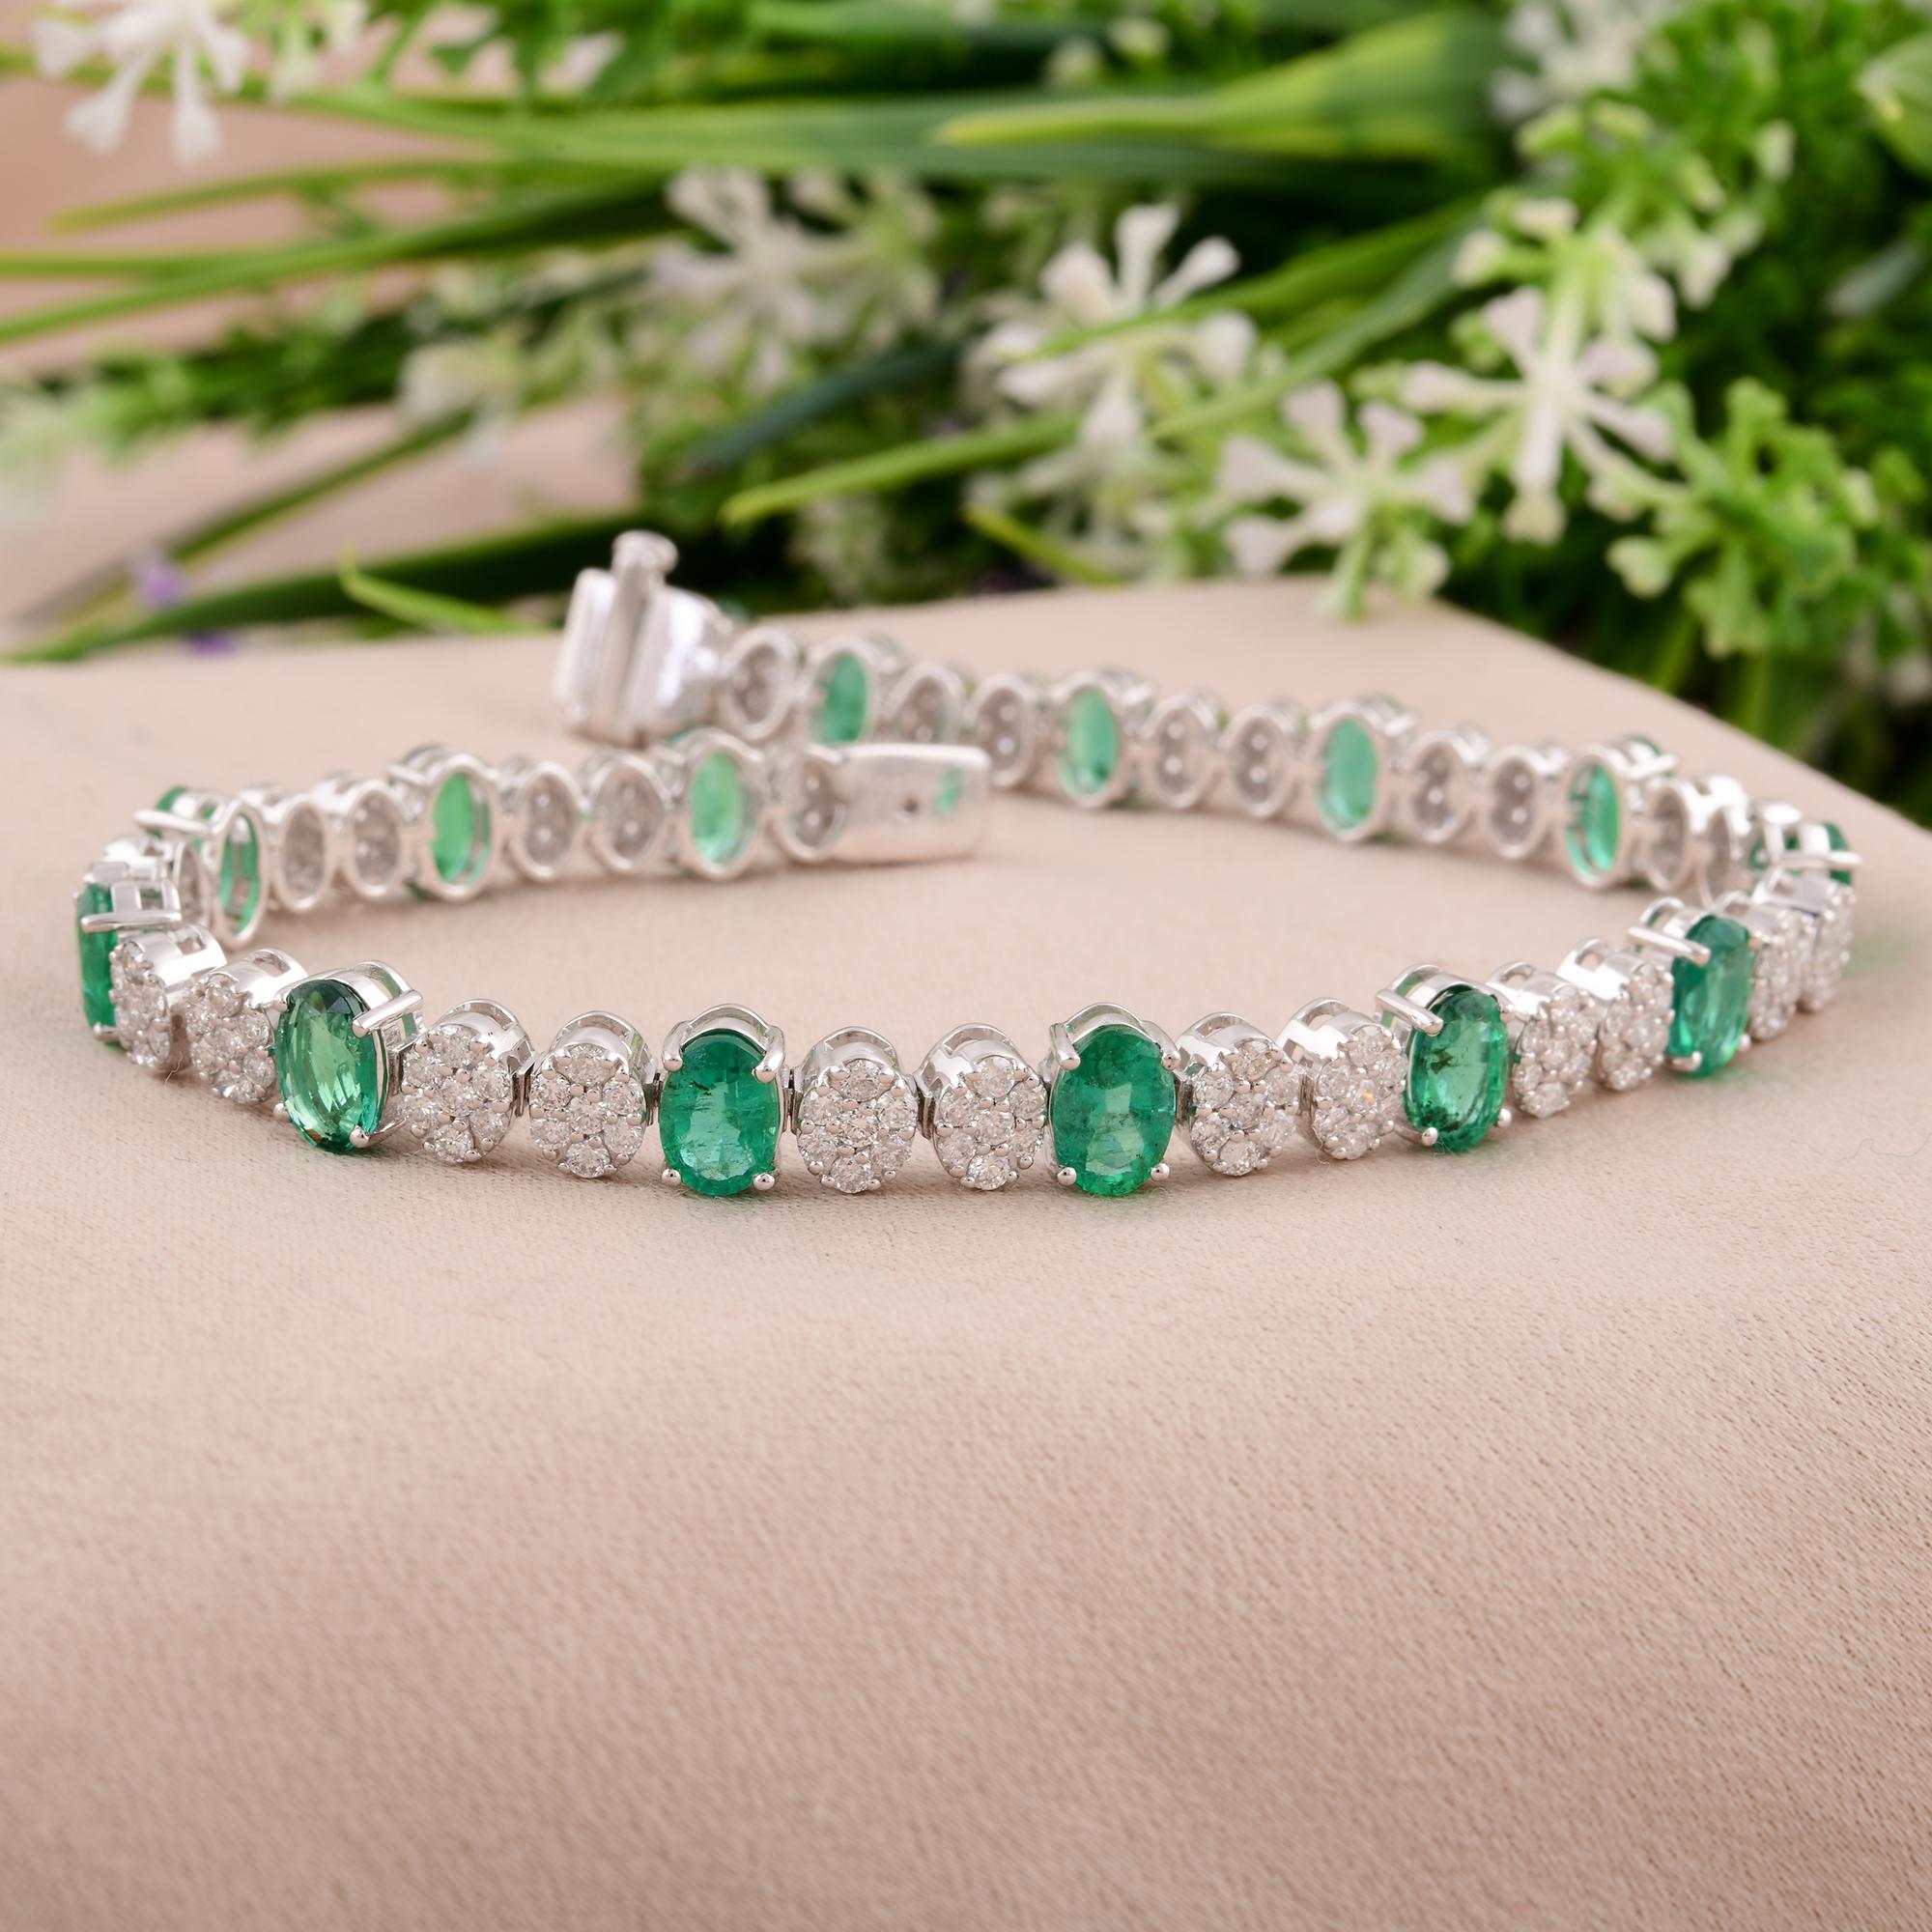 Oval Cut Oval Shape Zambian Emerald Gemstone Bracelet Diamond 18 Karat White Gold Jewelry For Sale